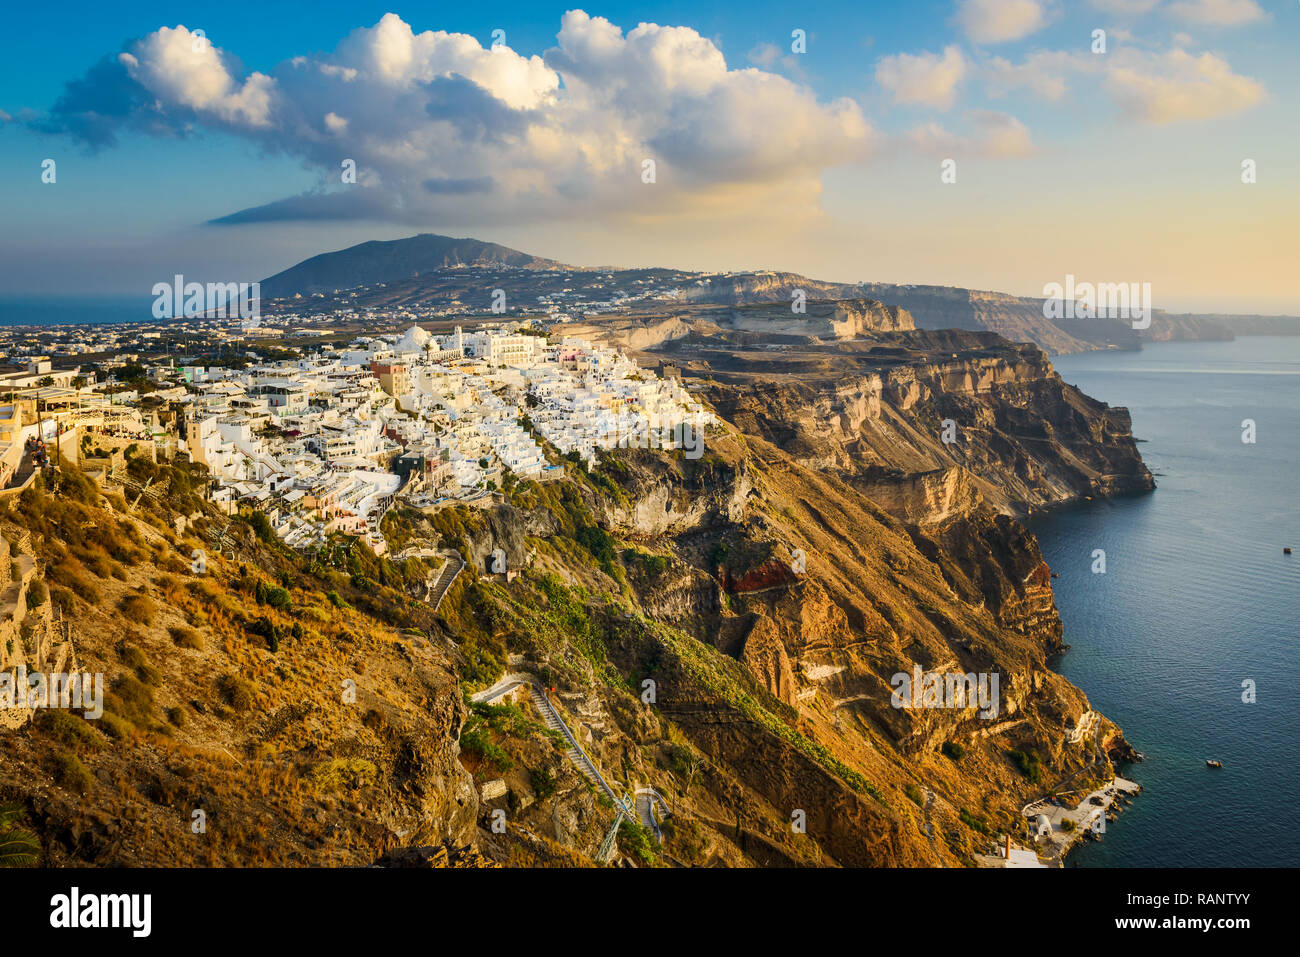 Thira town on the cliffs of Santorini island, Greece Stock Photo